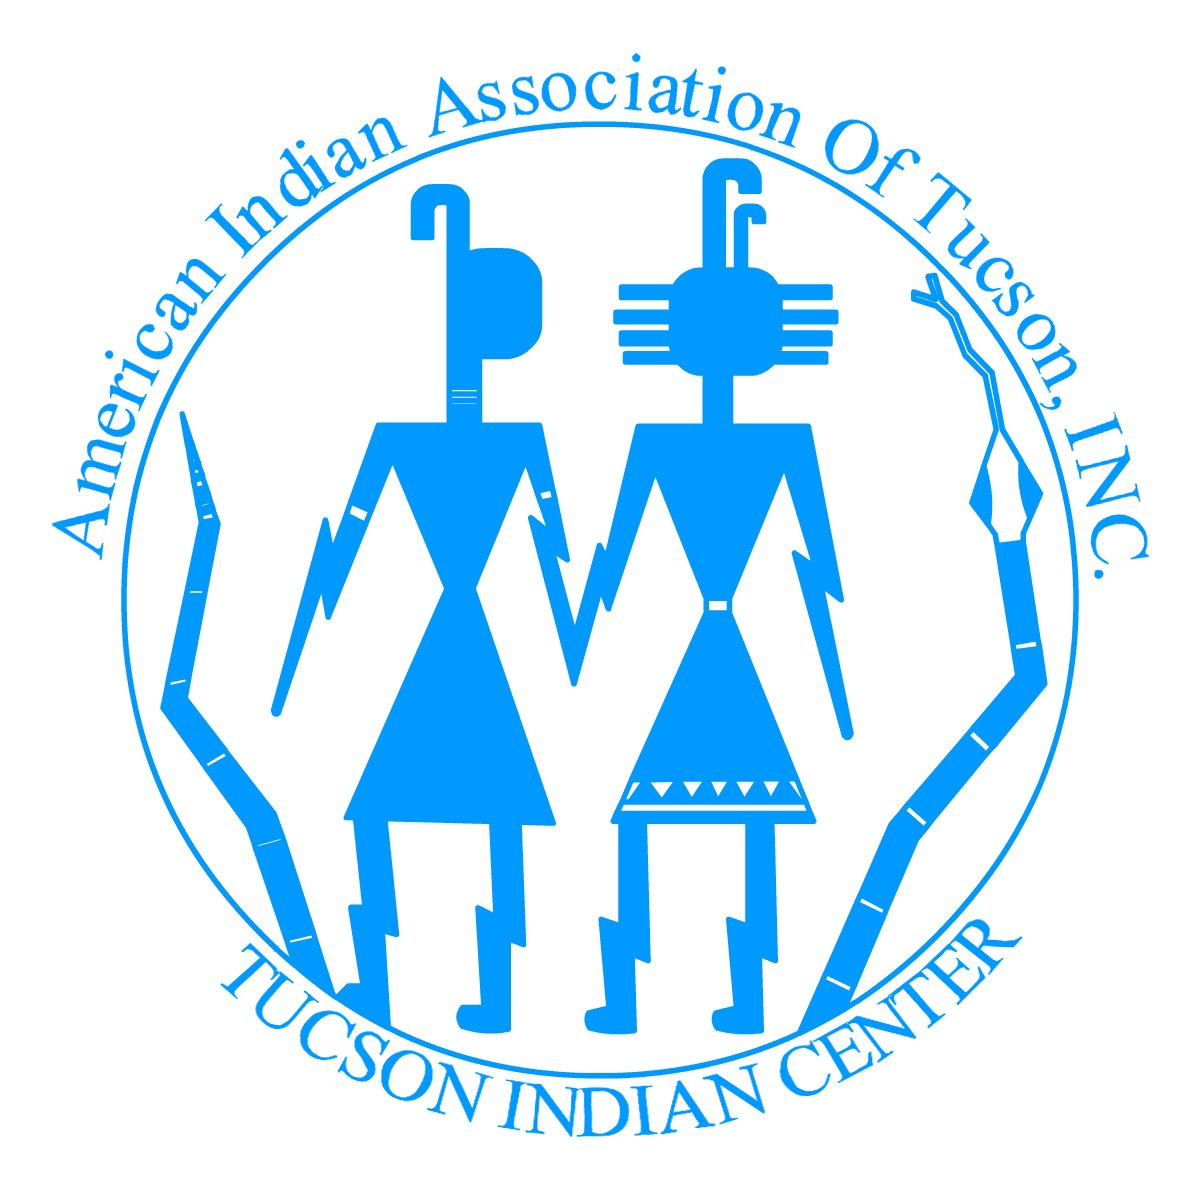 Native American Organization in Phoenix Arizona - Tucson Indian Center